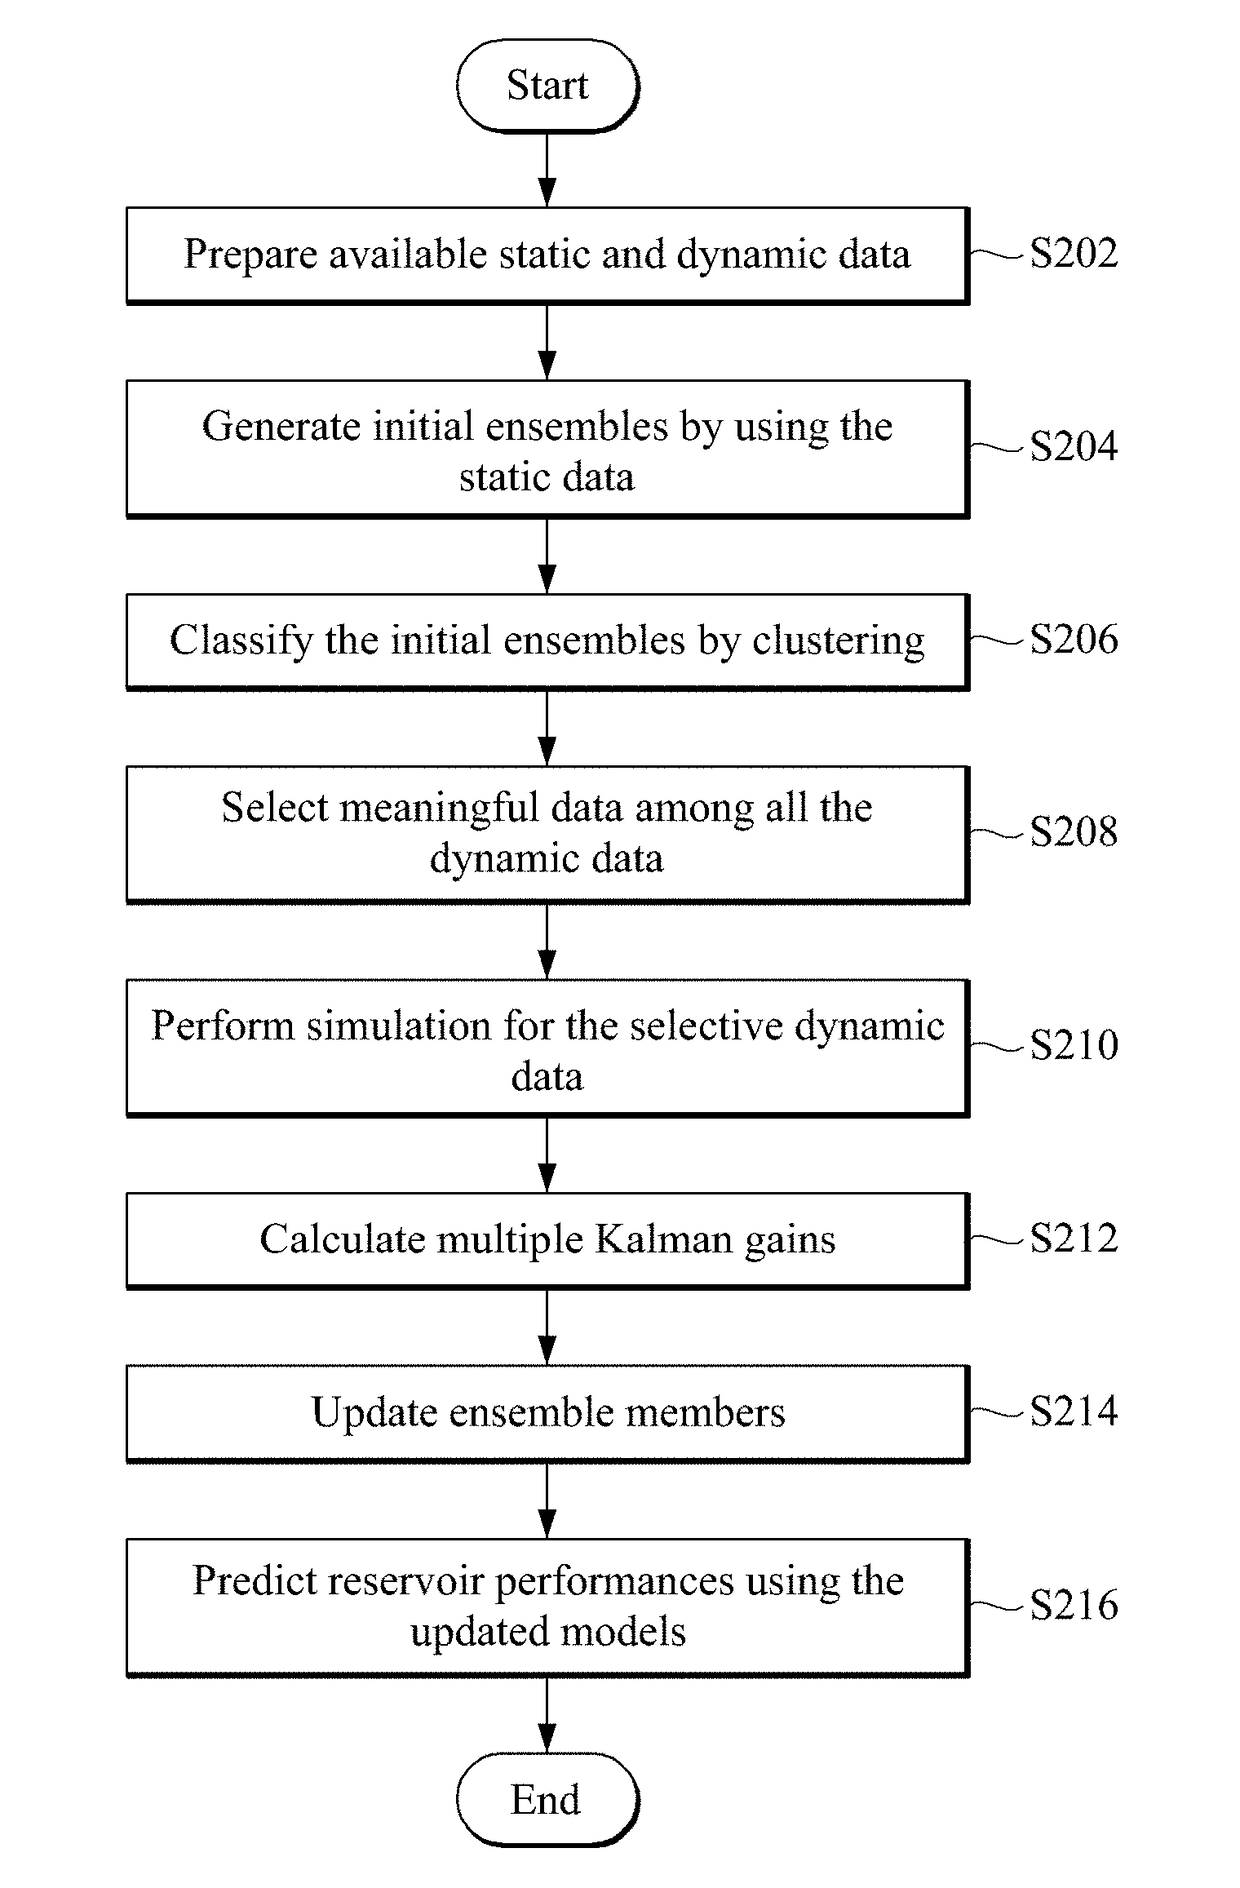 Ensemble-based reservoir characterization method using multiple kalman gains and dynamic data selection